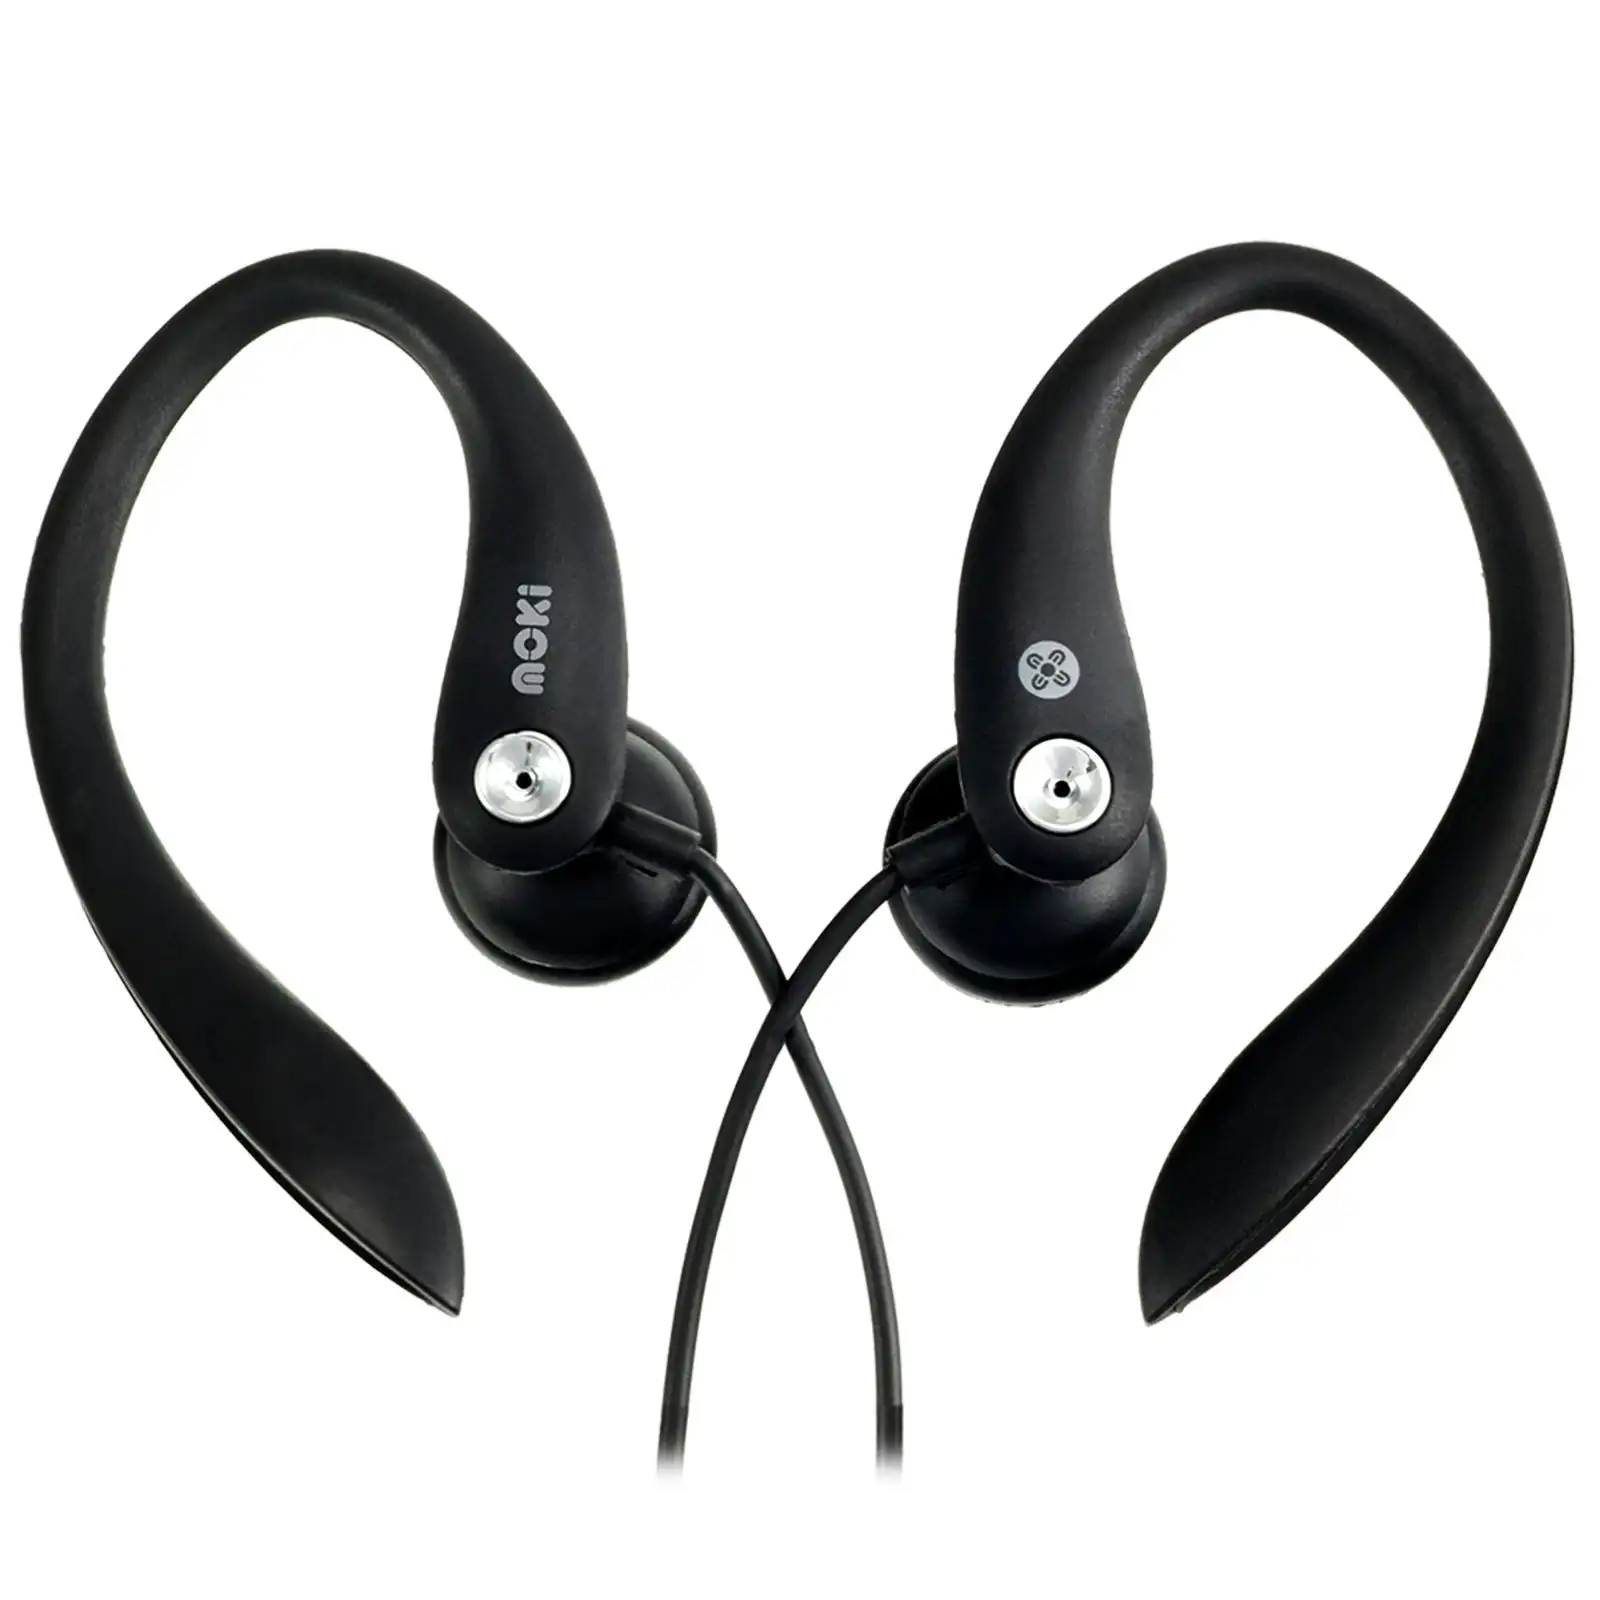 Moki Sports/Gym Headphones/Earphones w/Ear Hooks/3.5mm for iPhone/Android Black